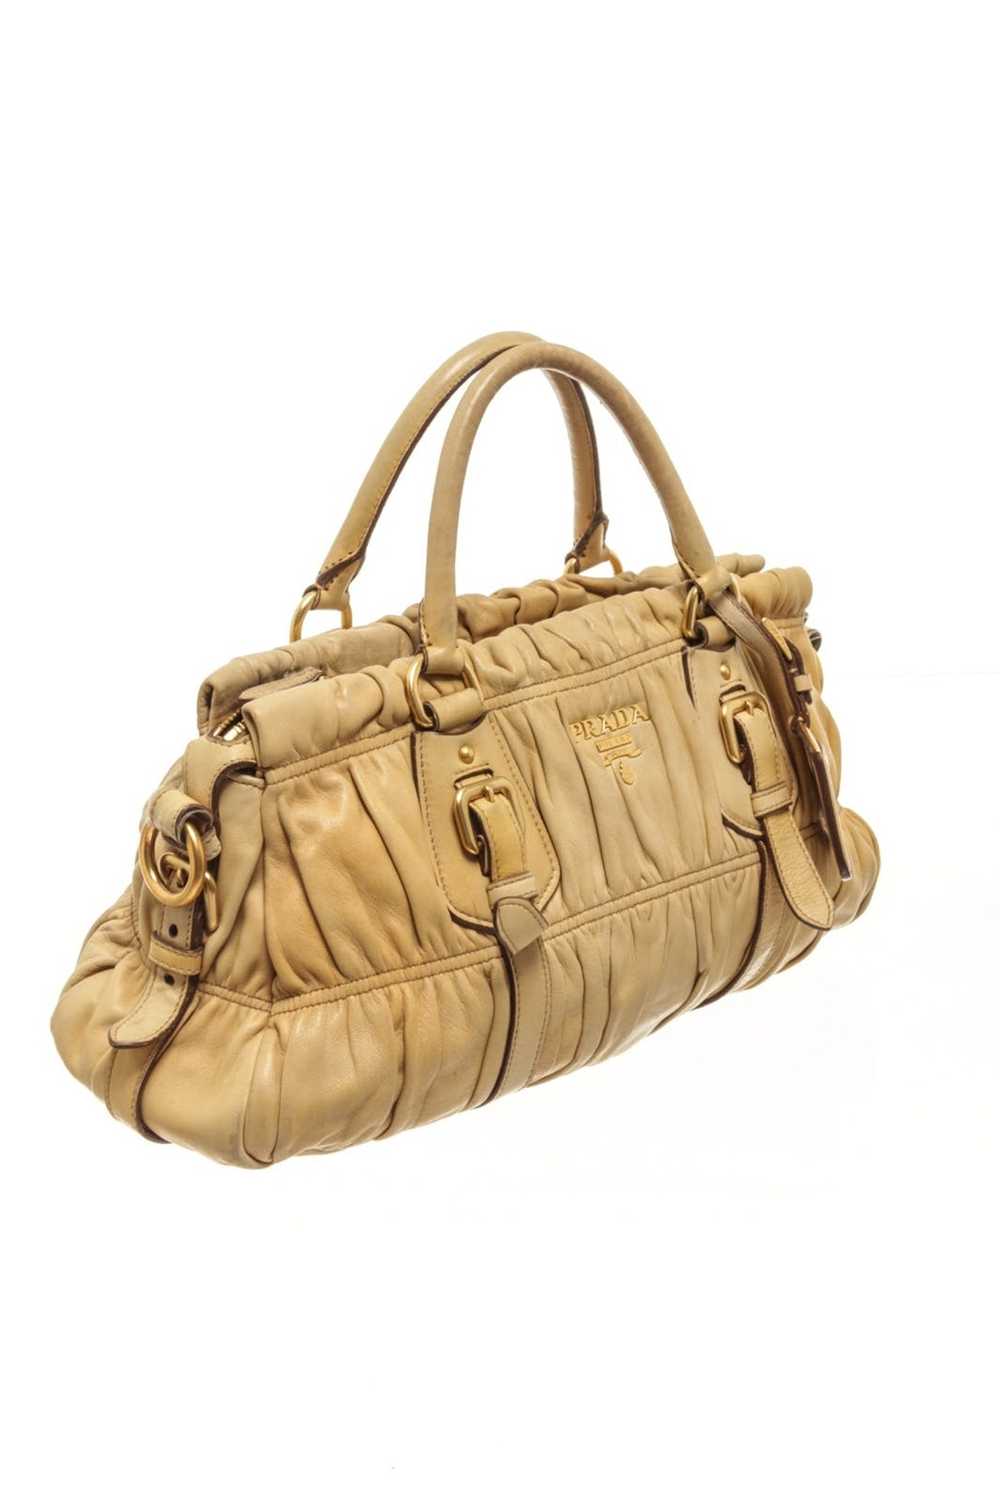 Prada Prada Light Brown Leather Shoulder Bag - image 3